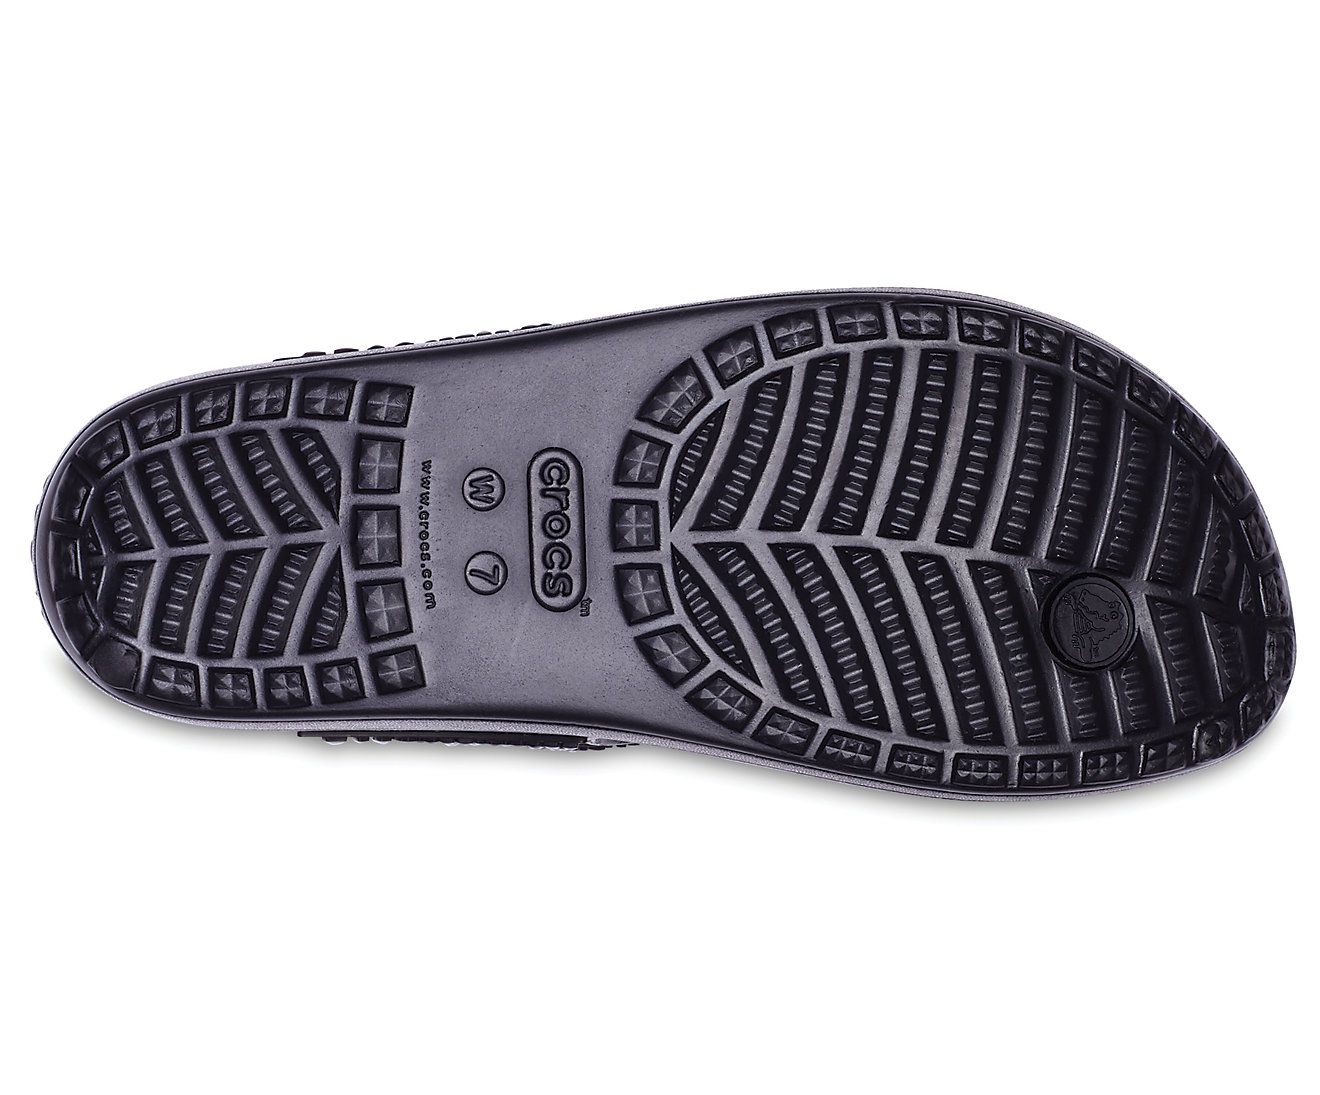 Crocs Black Slippers Price in India- Buy Crocs Black Slippers Online at ...